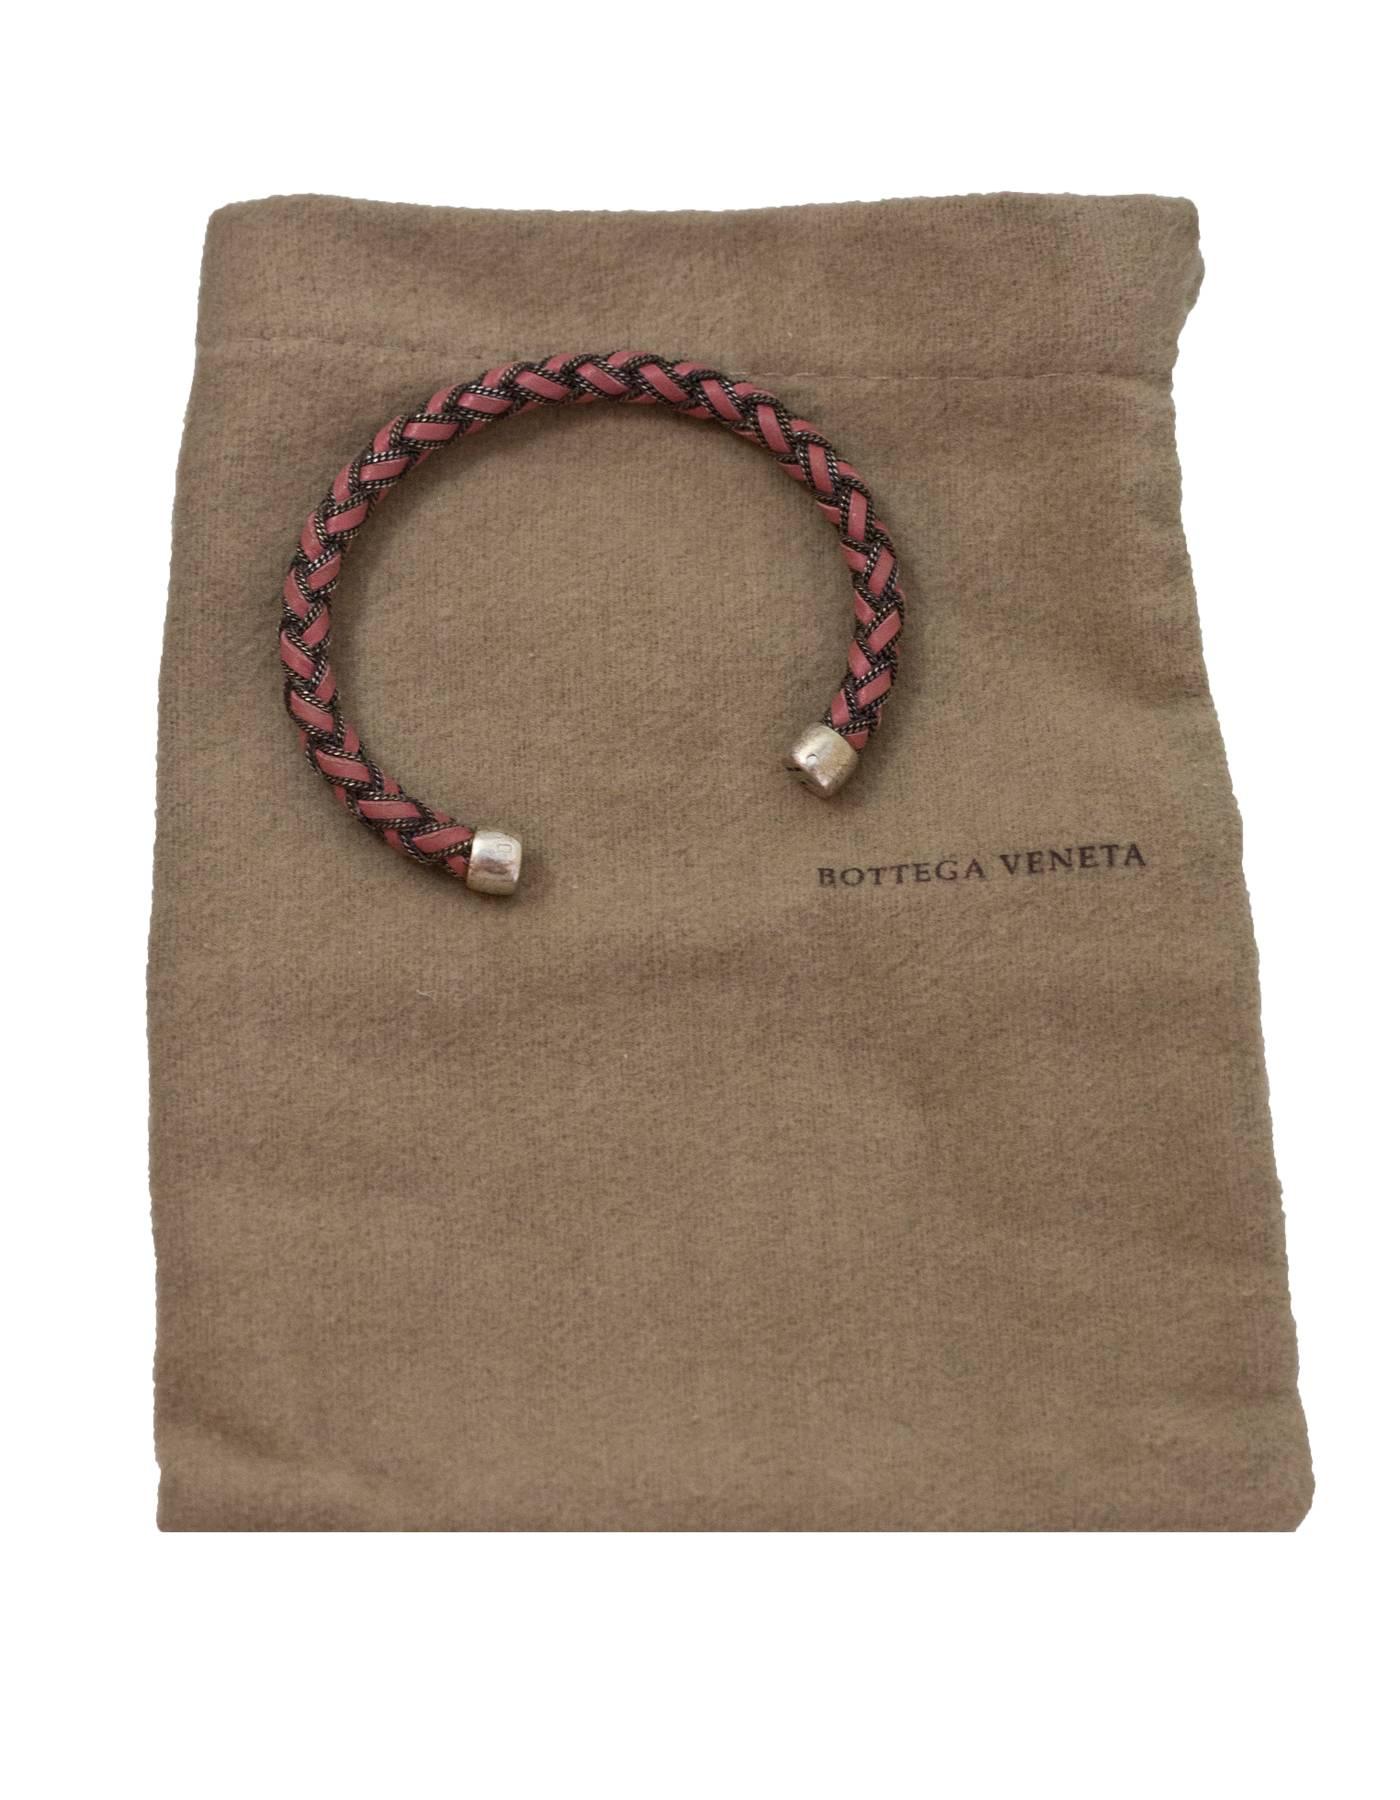 Bottega Veneta Pink Leather & Sterling Silver Braided Chain Cuff Bracelet 3